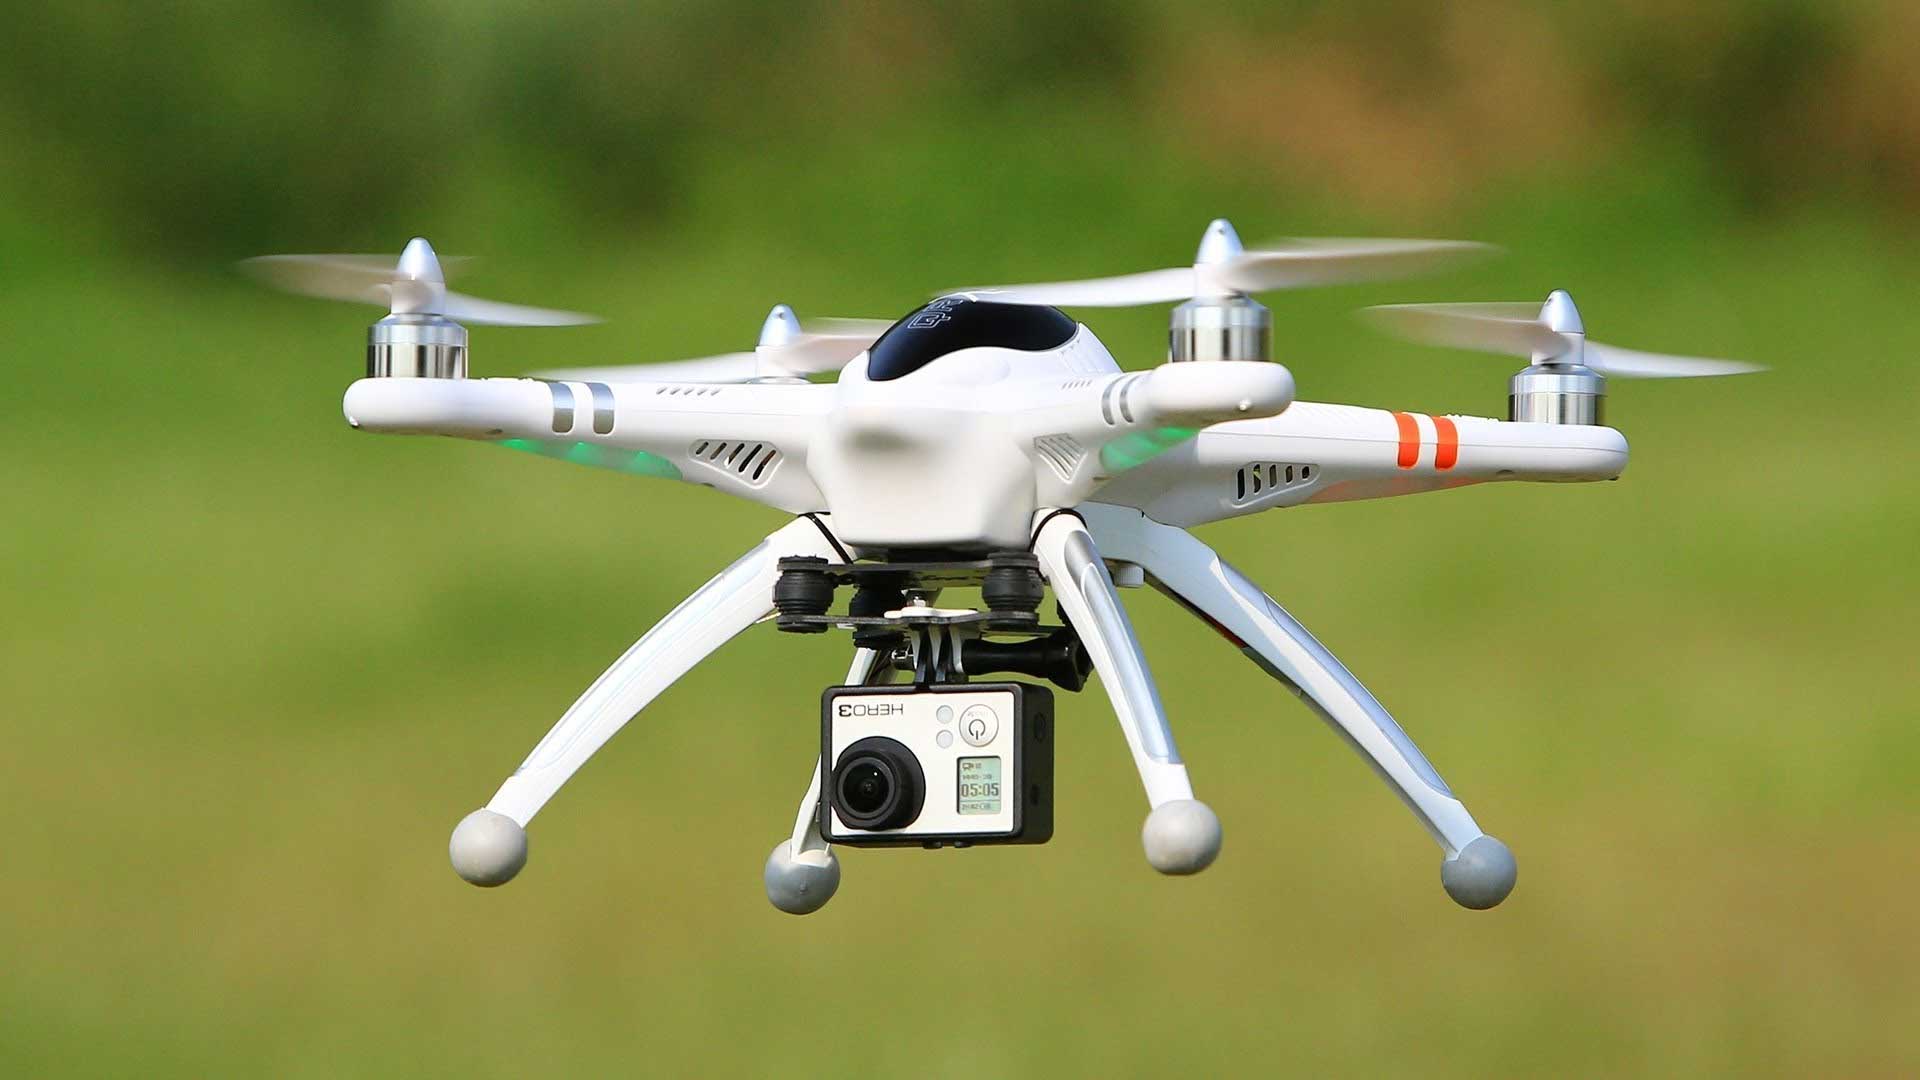 flycam-khac-voi-drone-nhu-the-nao